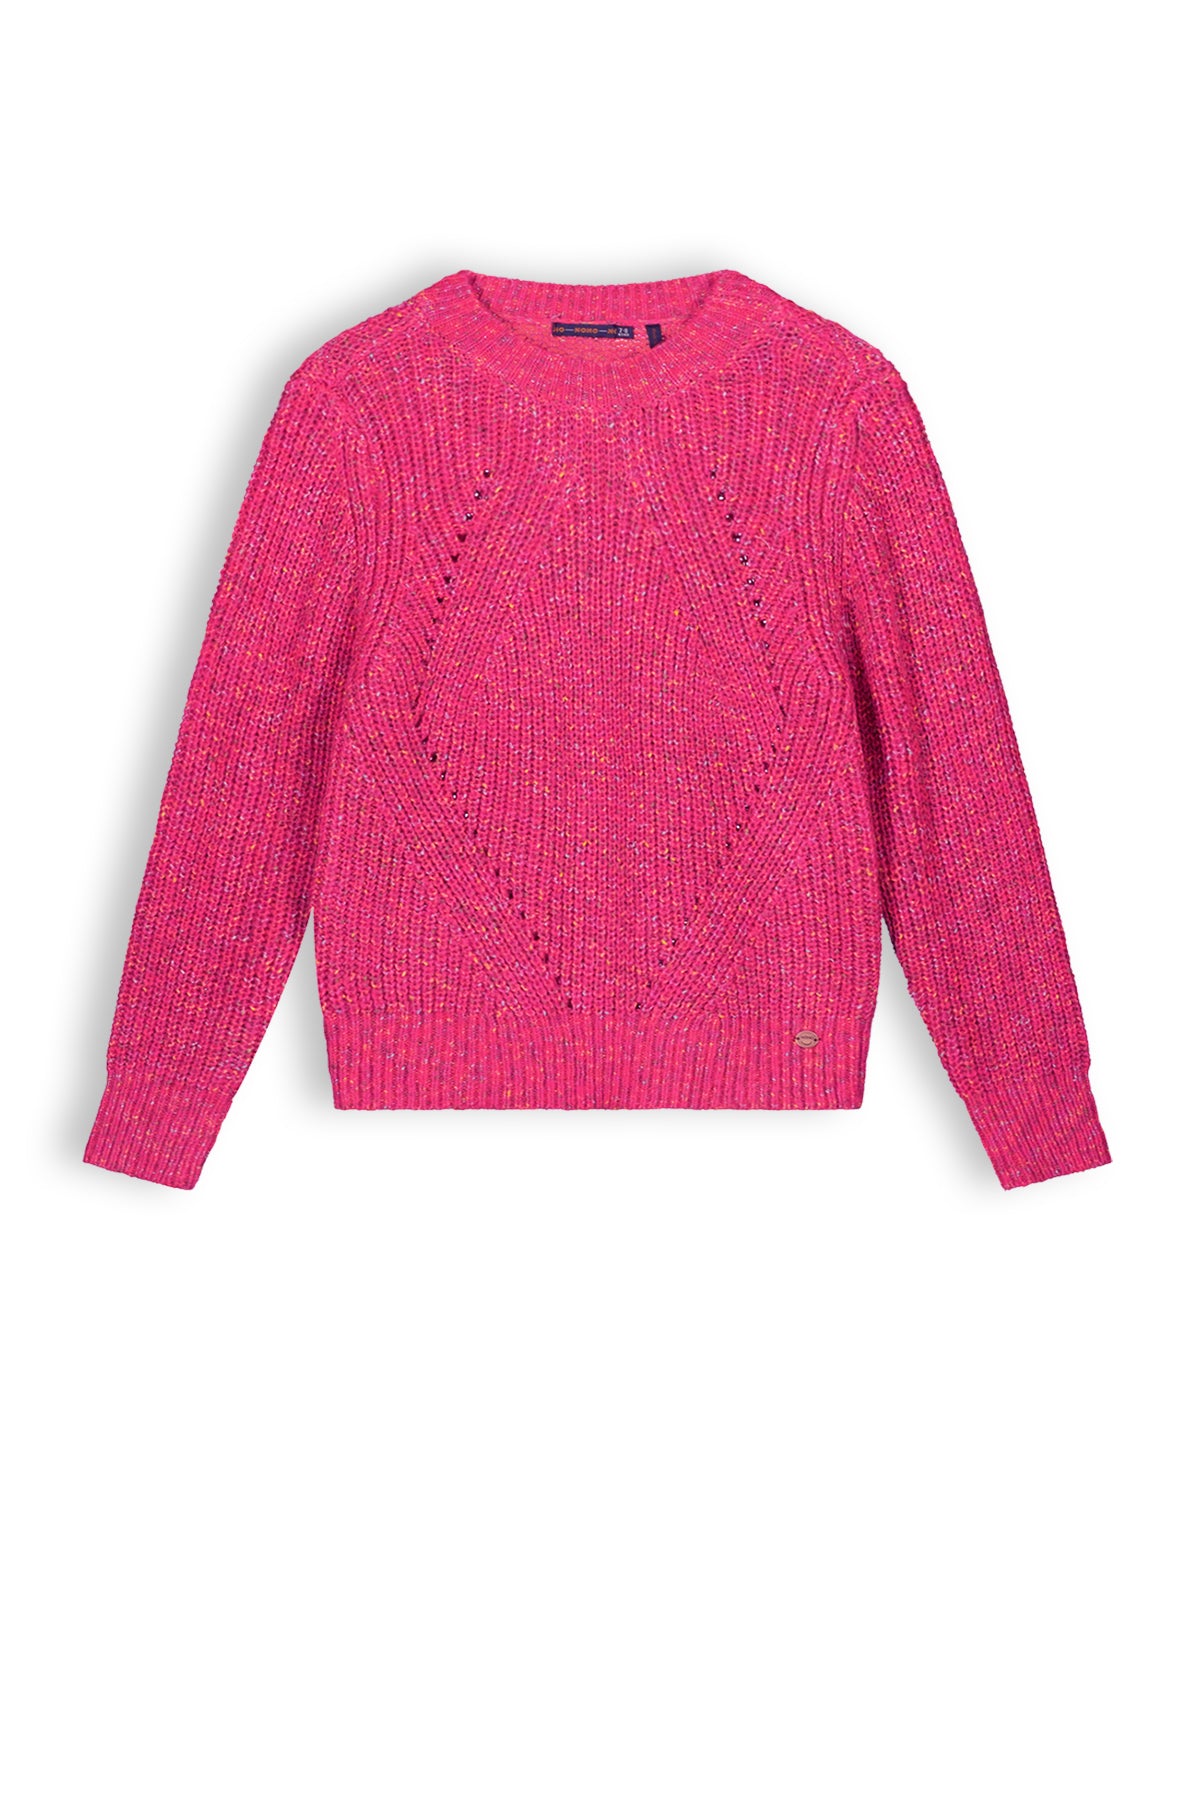 NoNo Kiara girls knitted sweater pink